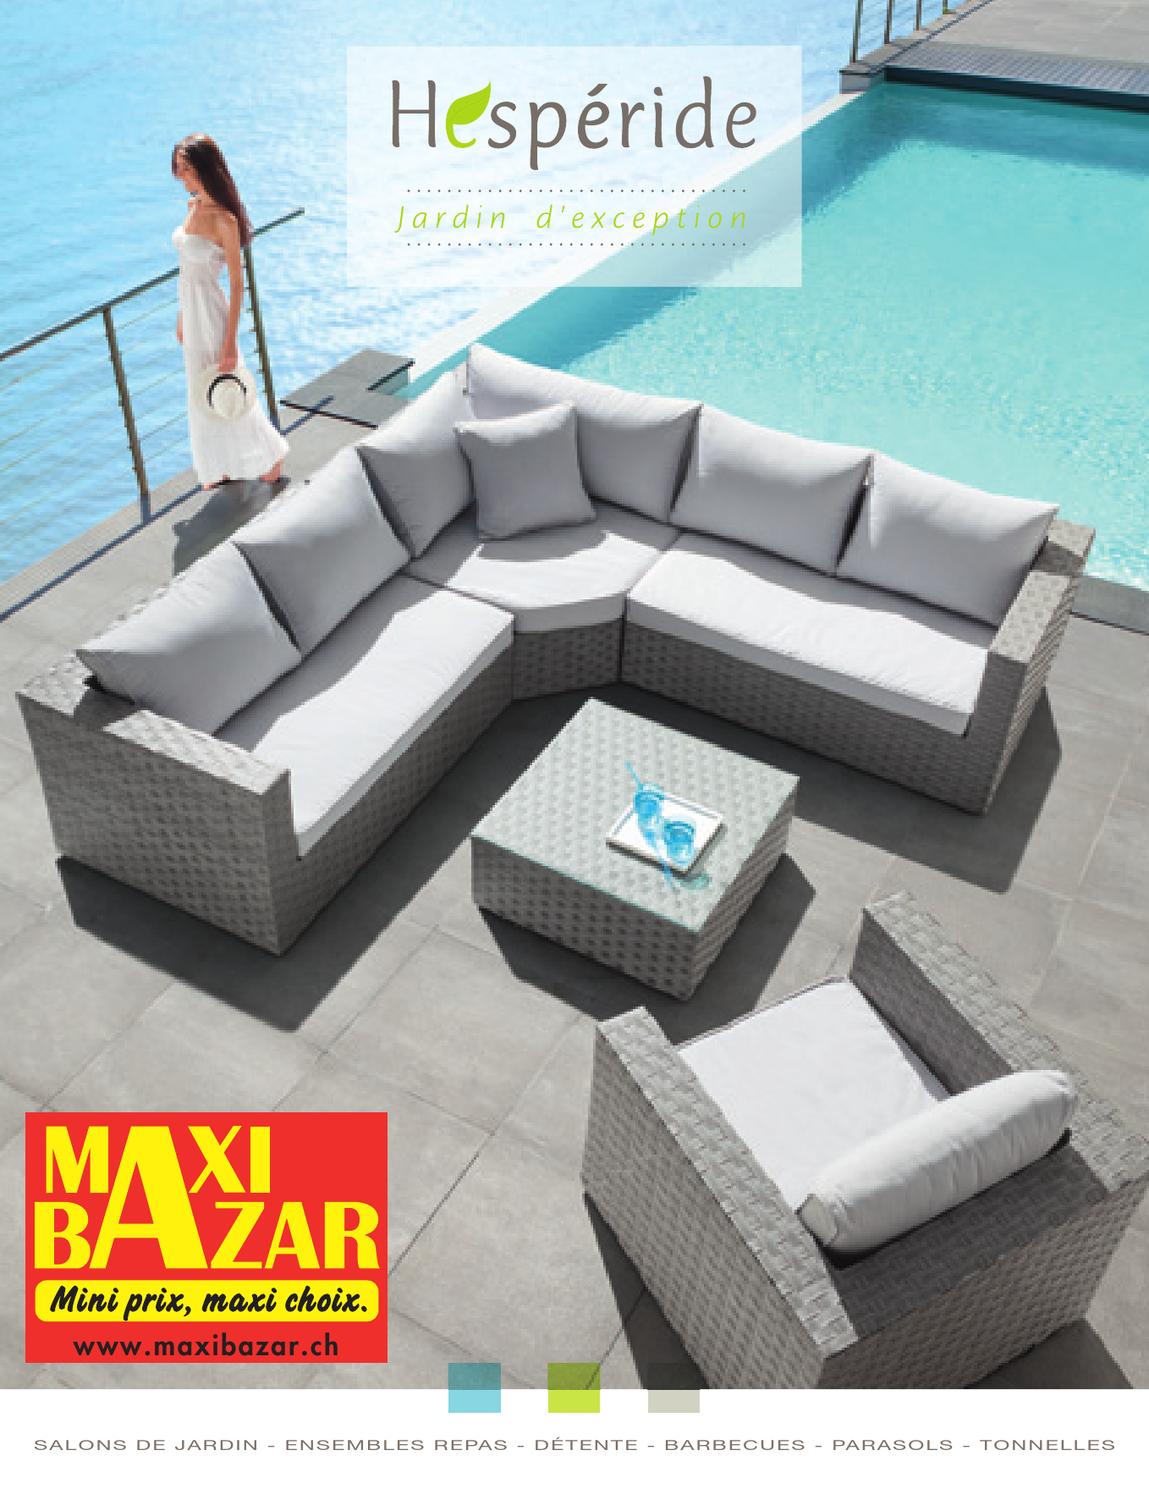 Salon De Jardin Encastrable 10 Places Best Of Maxibazar Jardin Ch by Maxibazar issuu